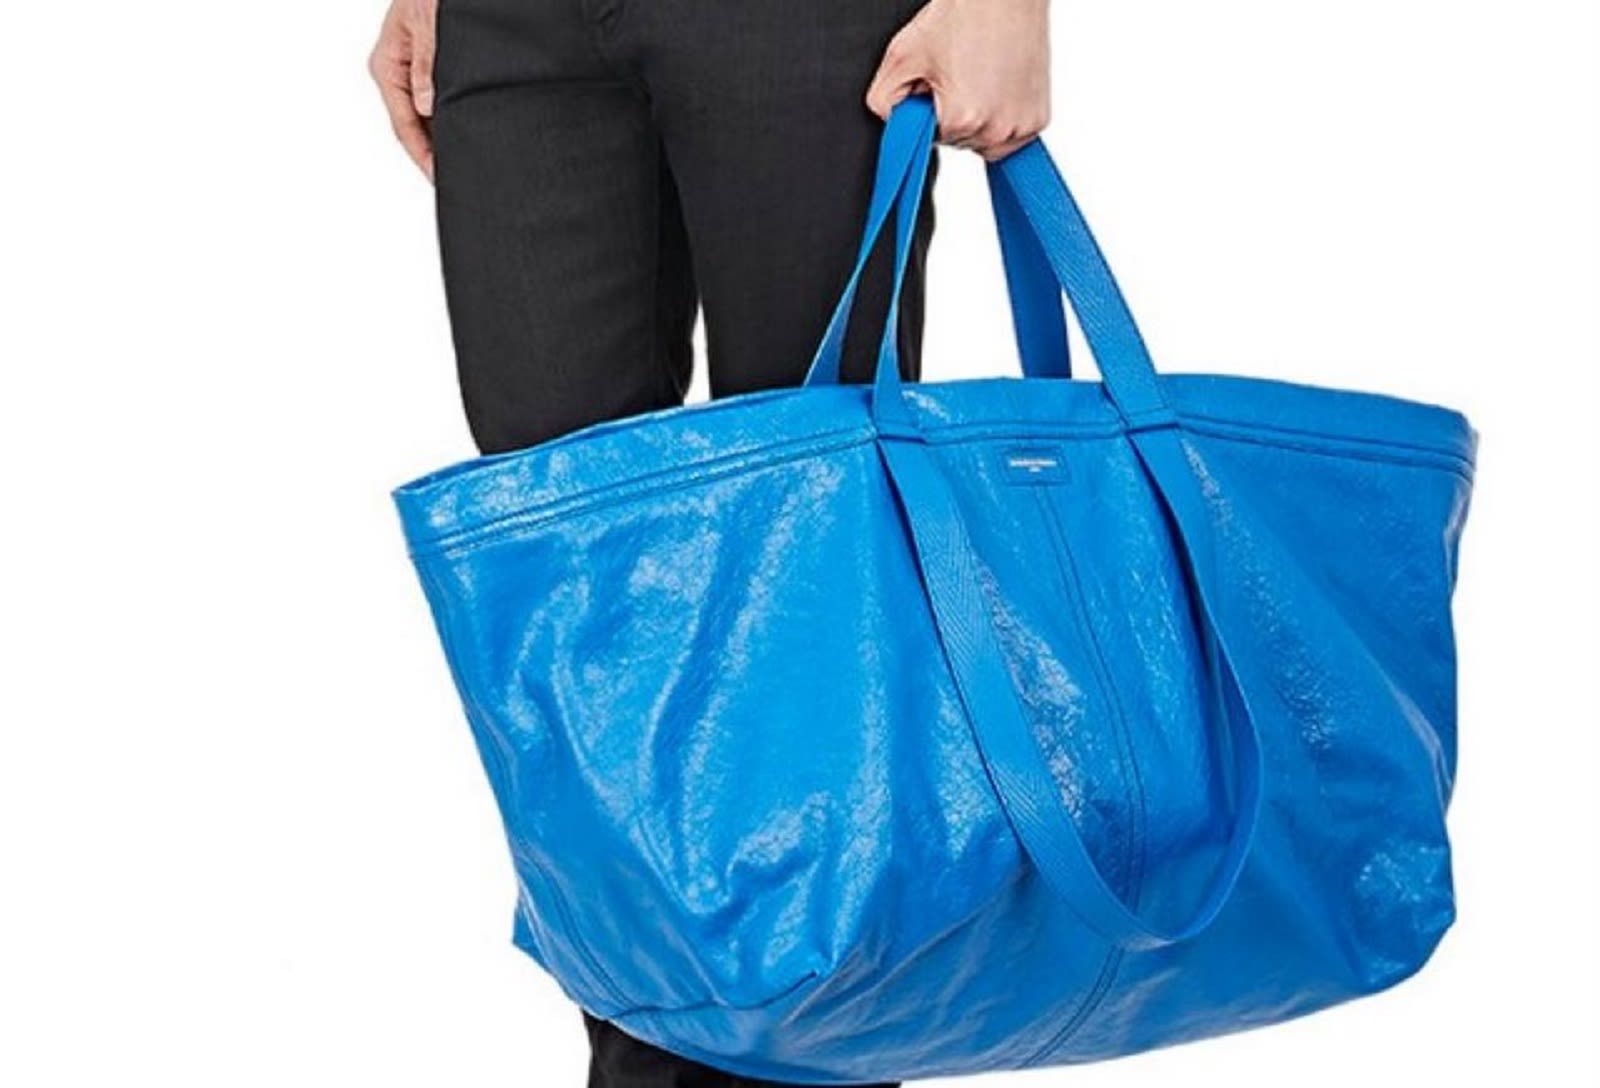 Balenciaga’s $2,145 bag is just like Ikea’s 99 cent tote | CNN